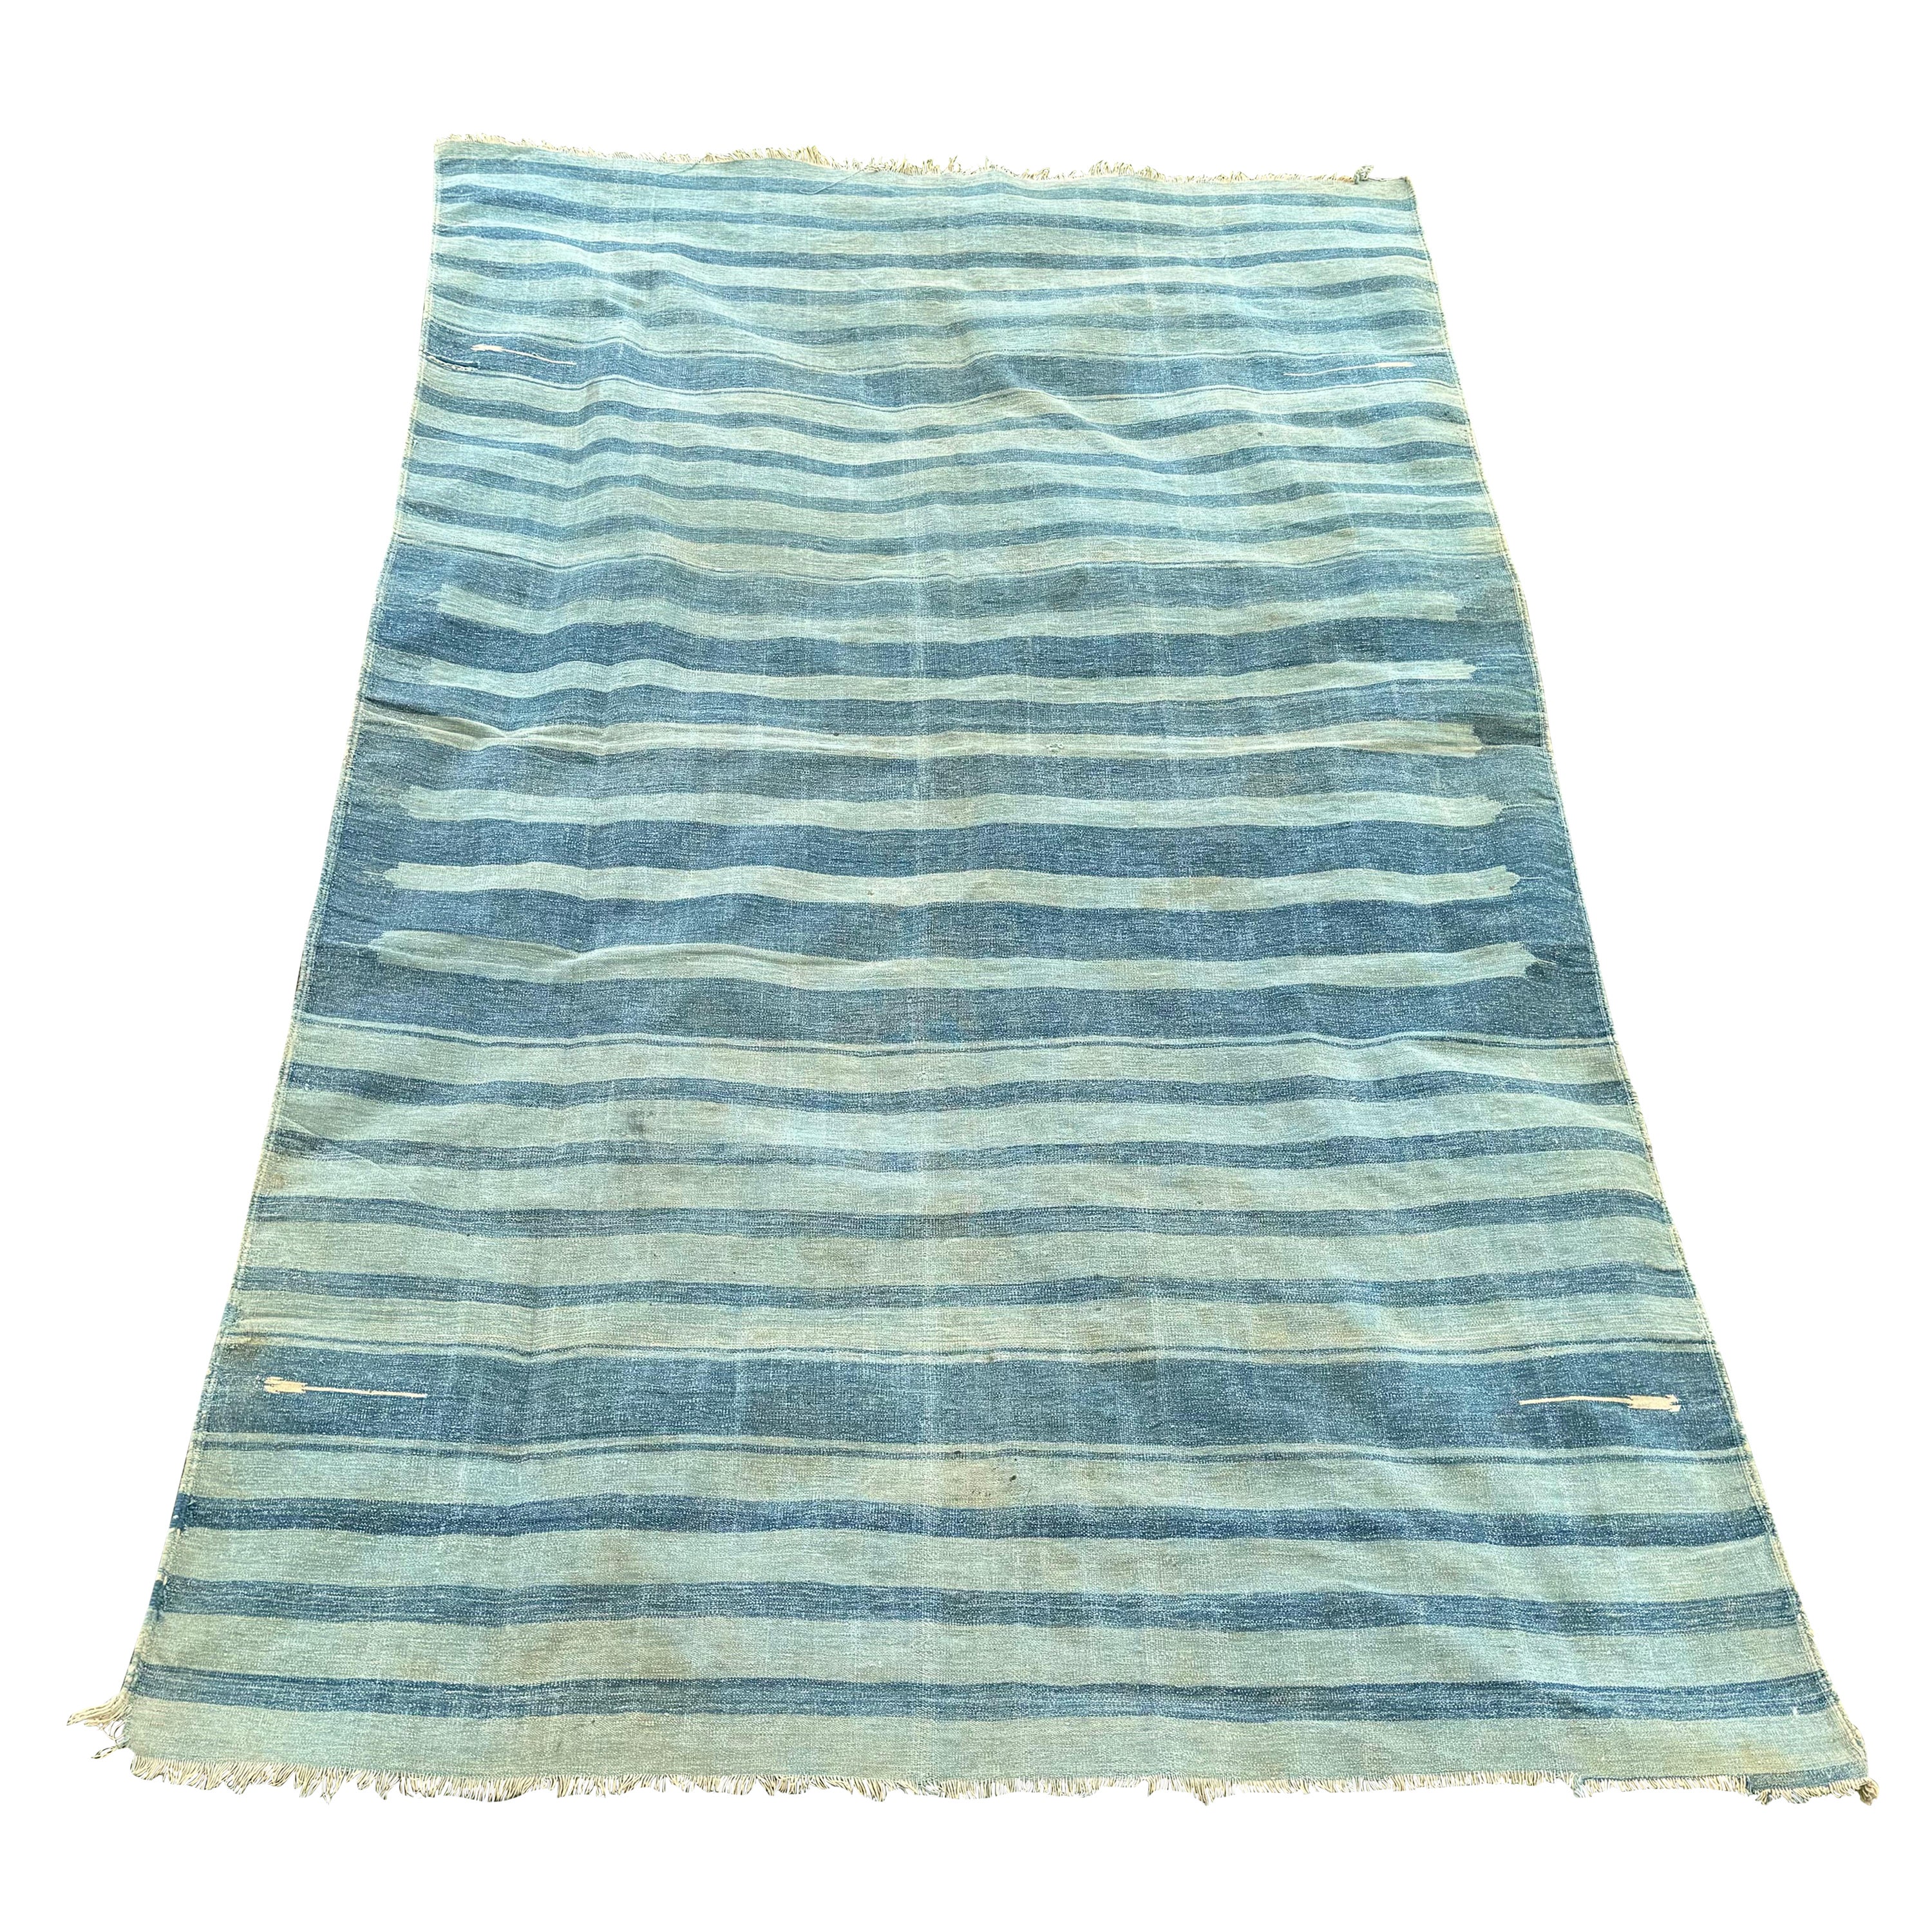 Antique Indian Cotton Dhurrie Blue Stripe Rug 5 x 8